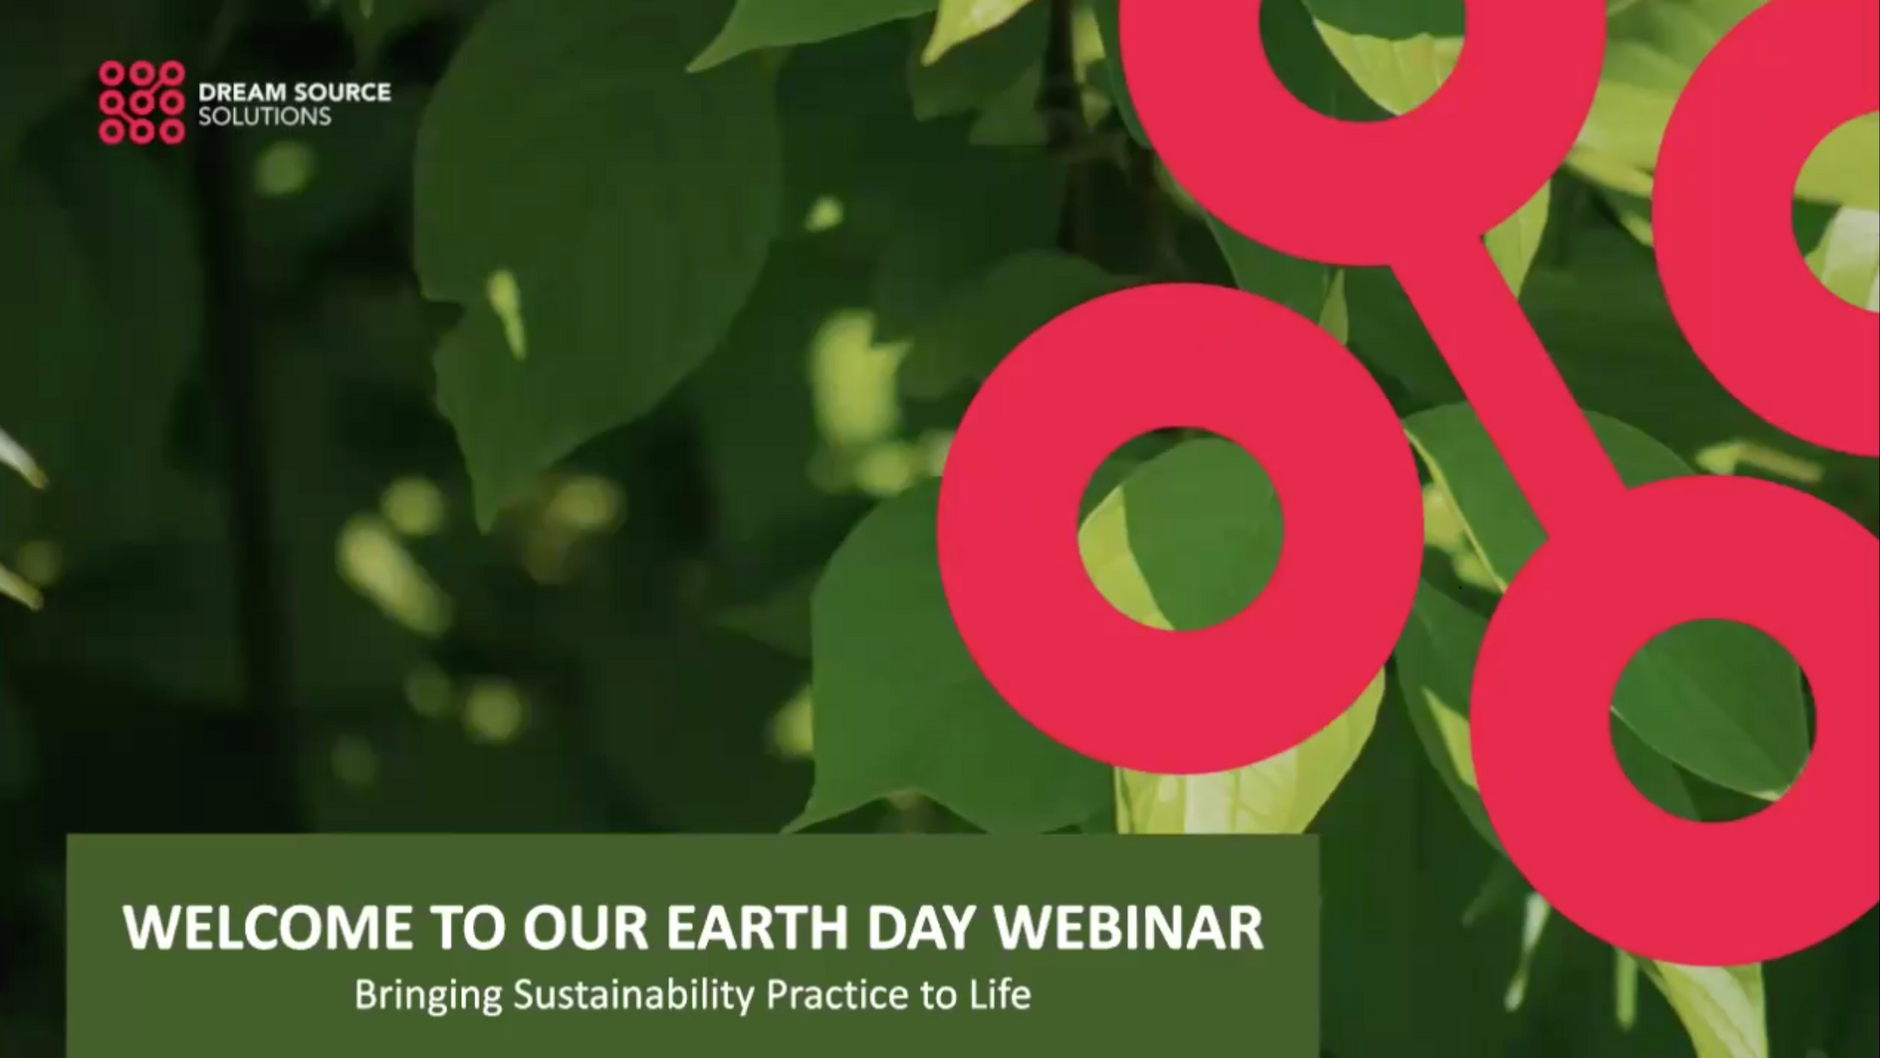 Earth Day Webinar - ESG Focus on the "E"